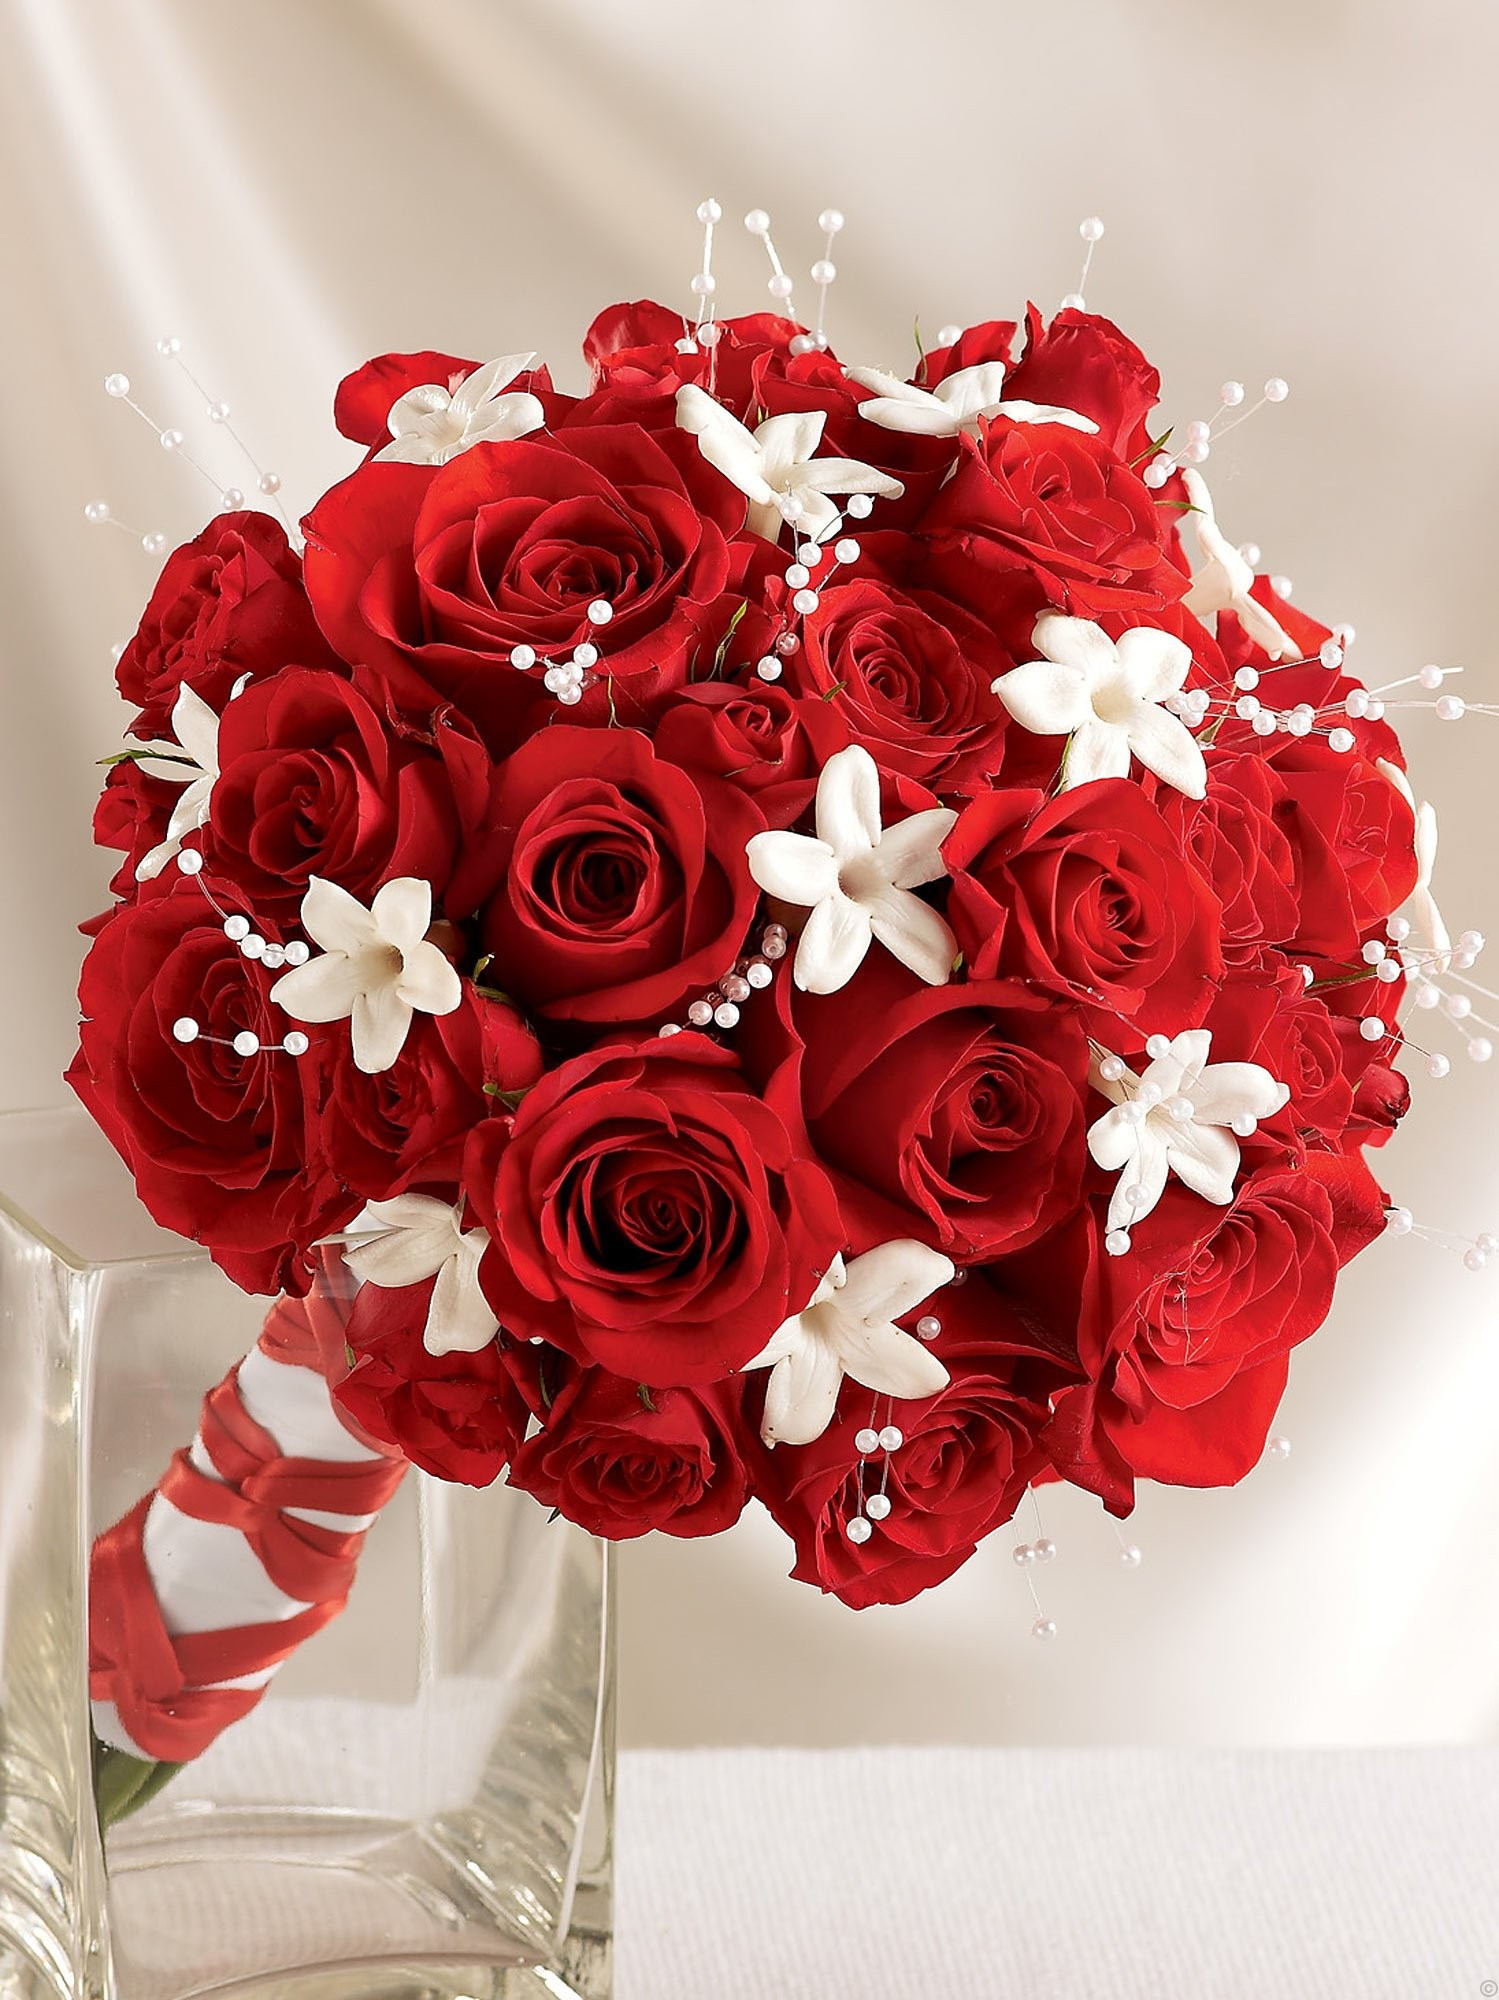 Red Roses Bouquet for Weddings | manworksdesign.com